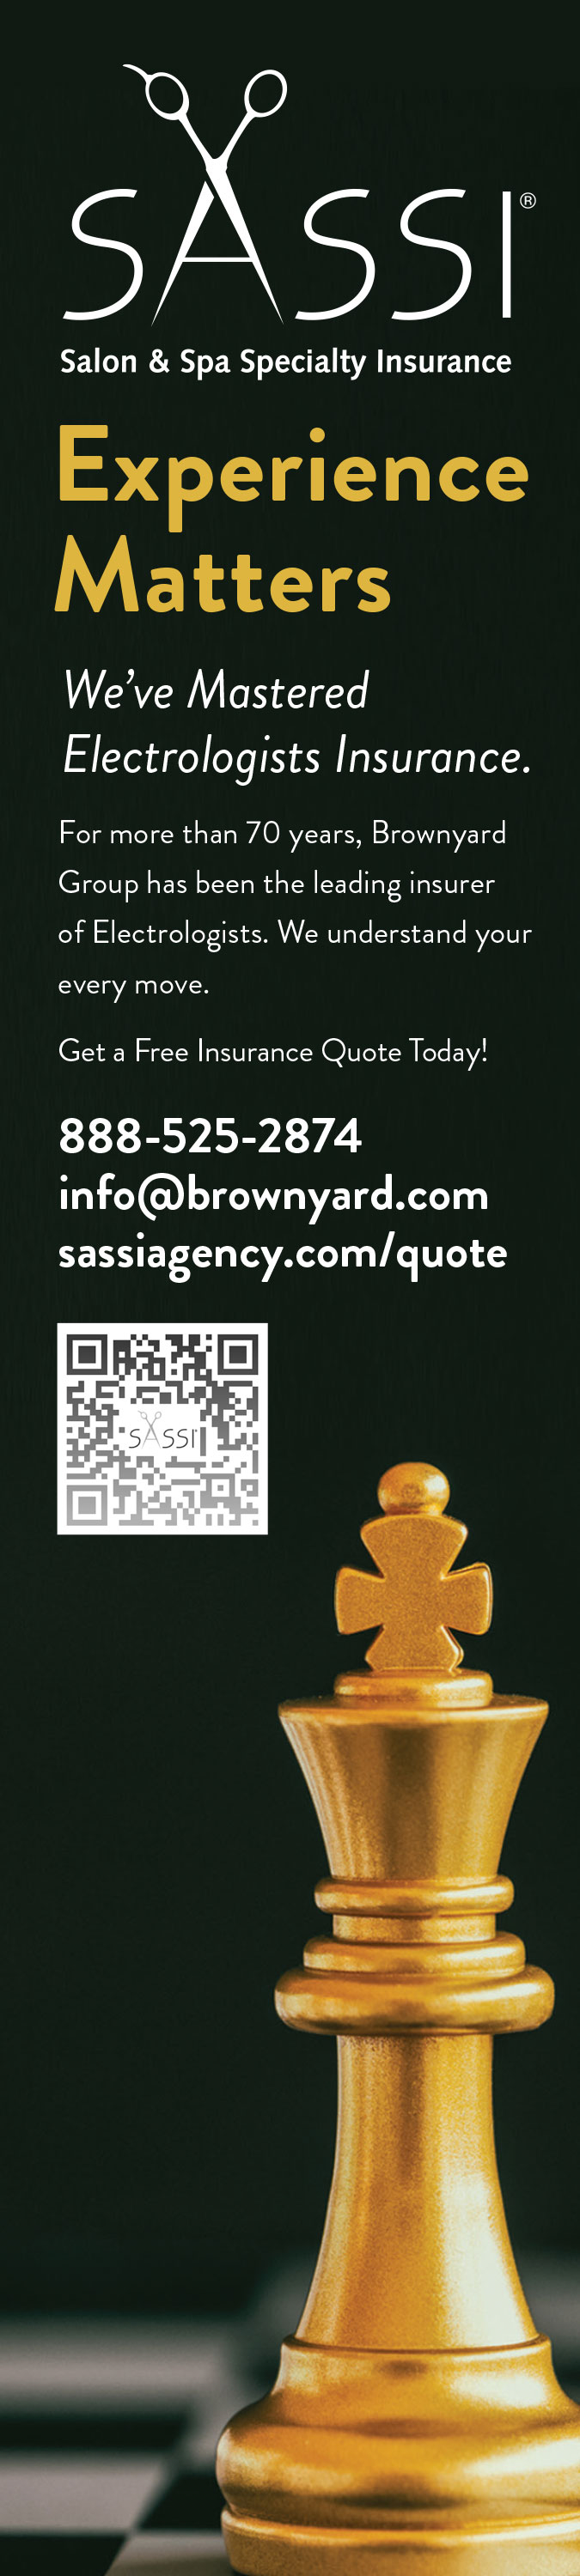 SASSI Salon & Spa Specialty Insurance